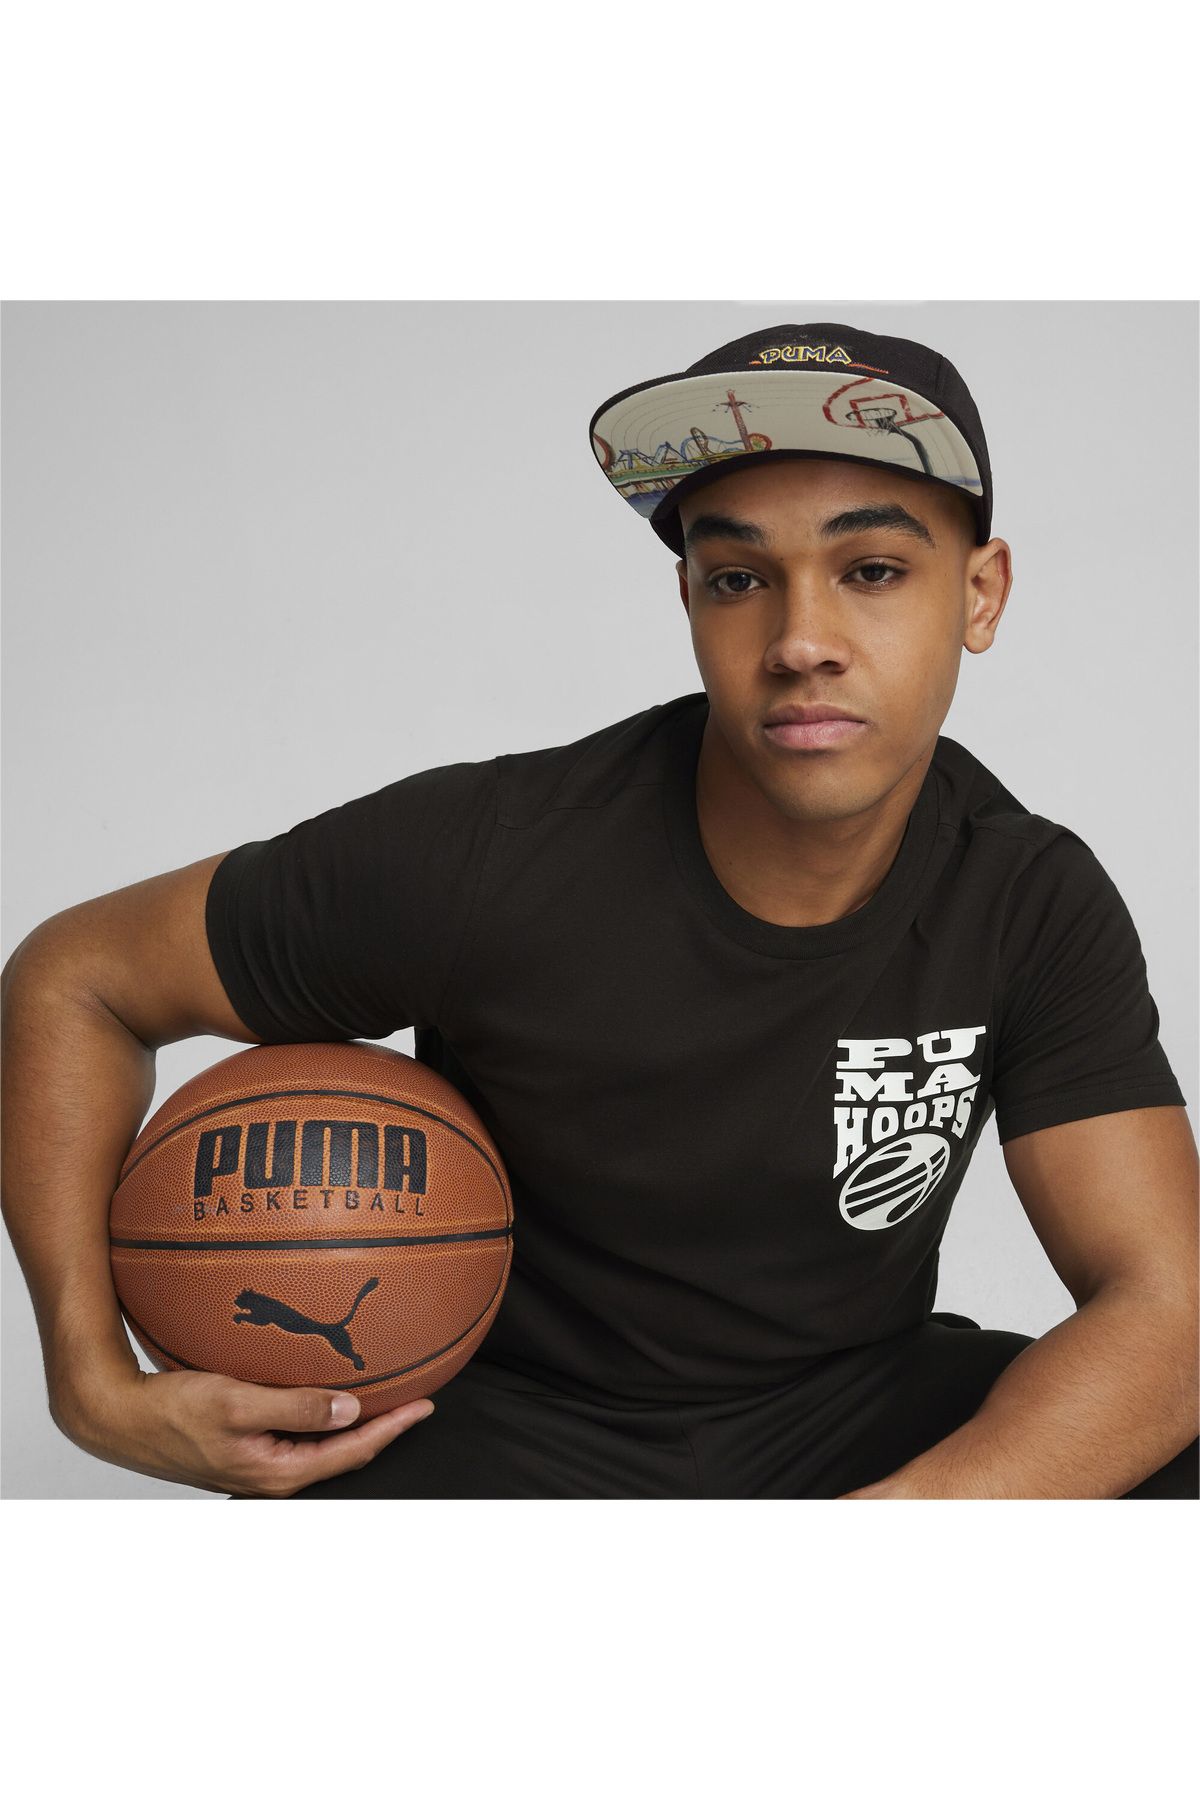 Puma درپوش 5 پانل بسکتبال unisex کلاه سیاه